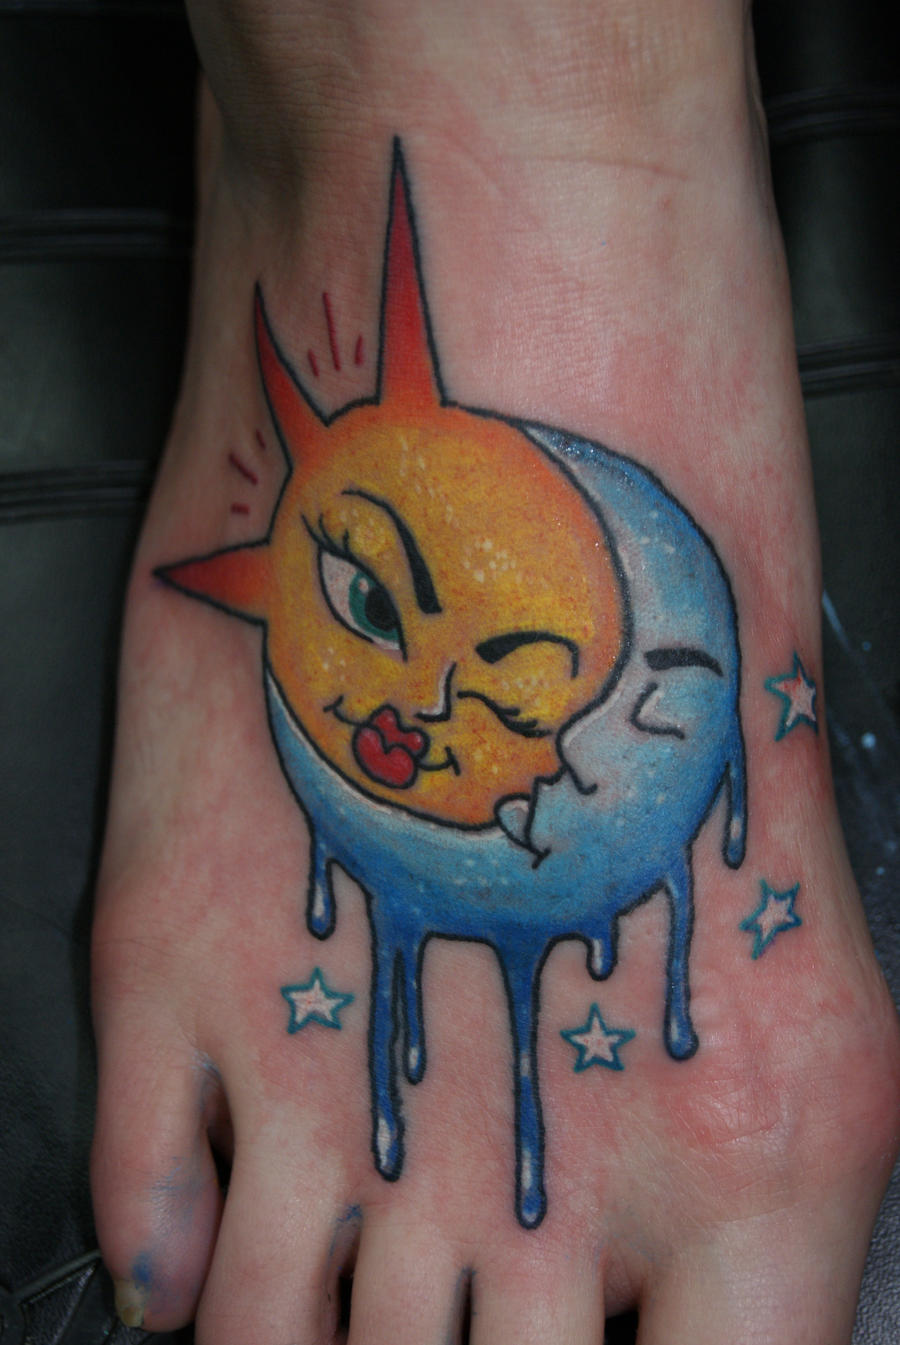 Custom Sun and Moon Tattoo